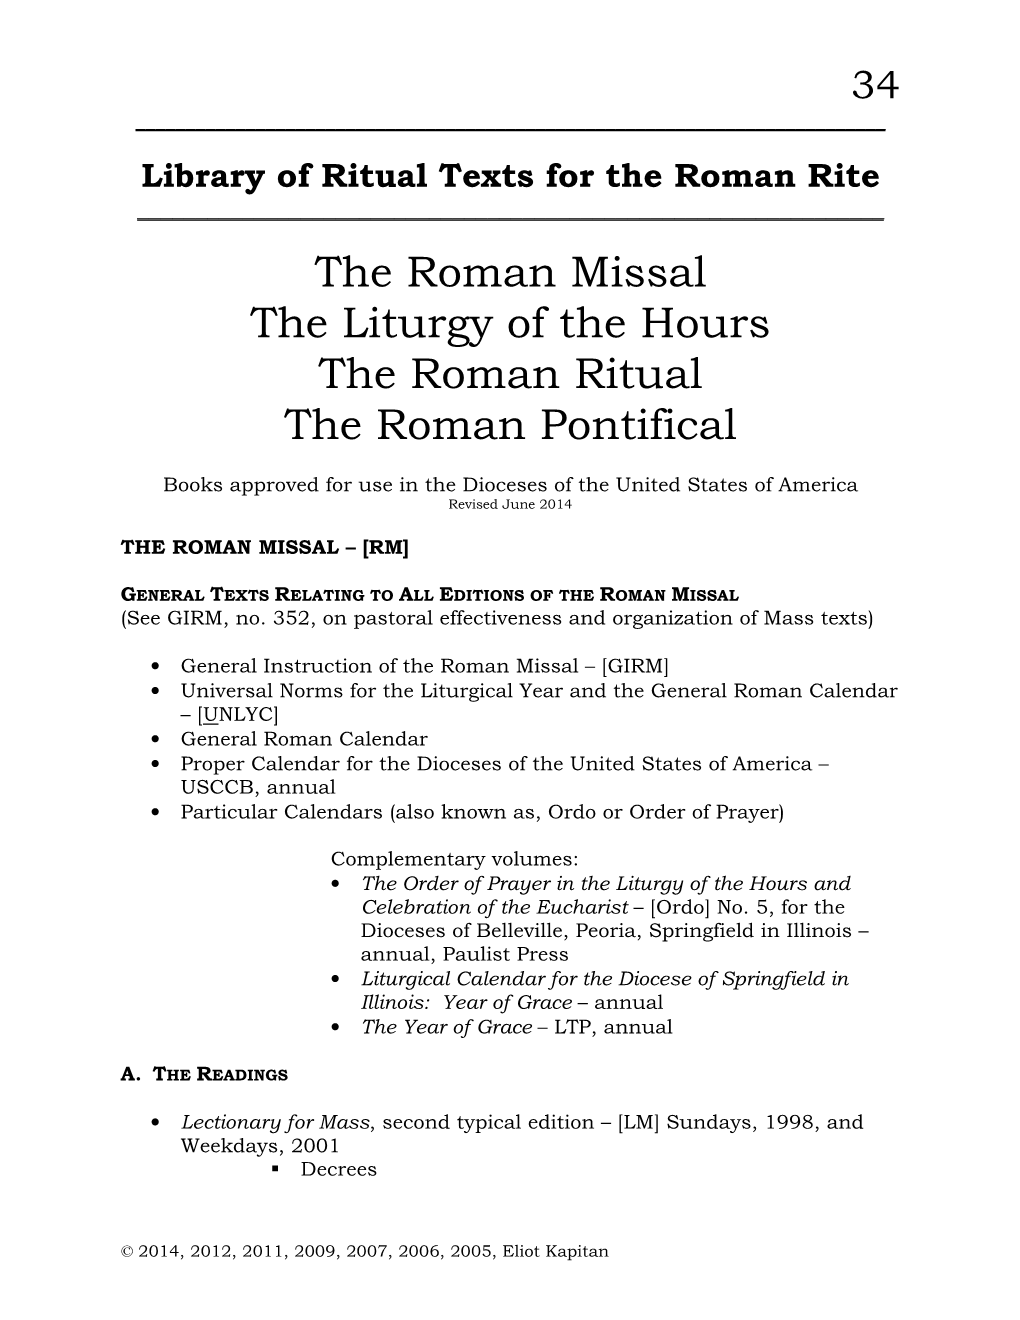 The Roman Missal the Liturgy of the Hours the Roman Ritual the Roman Pontifical